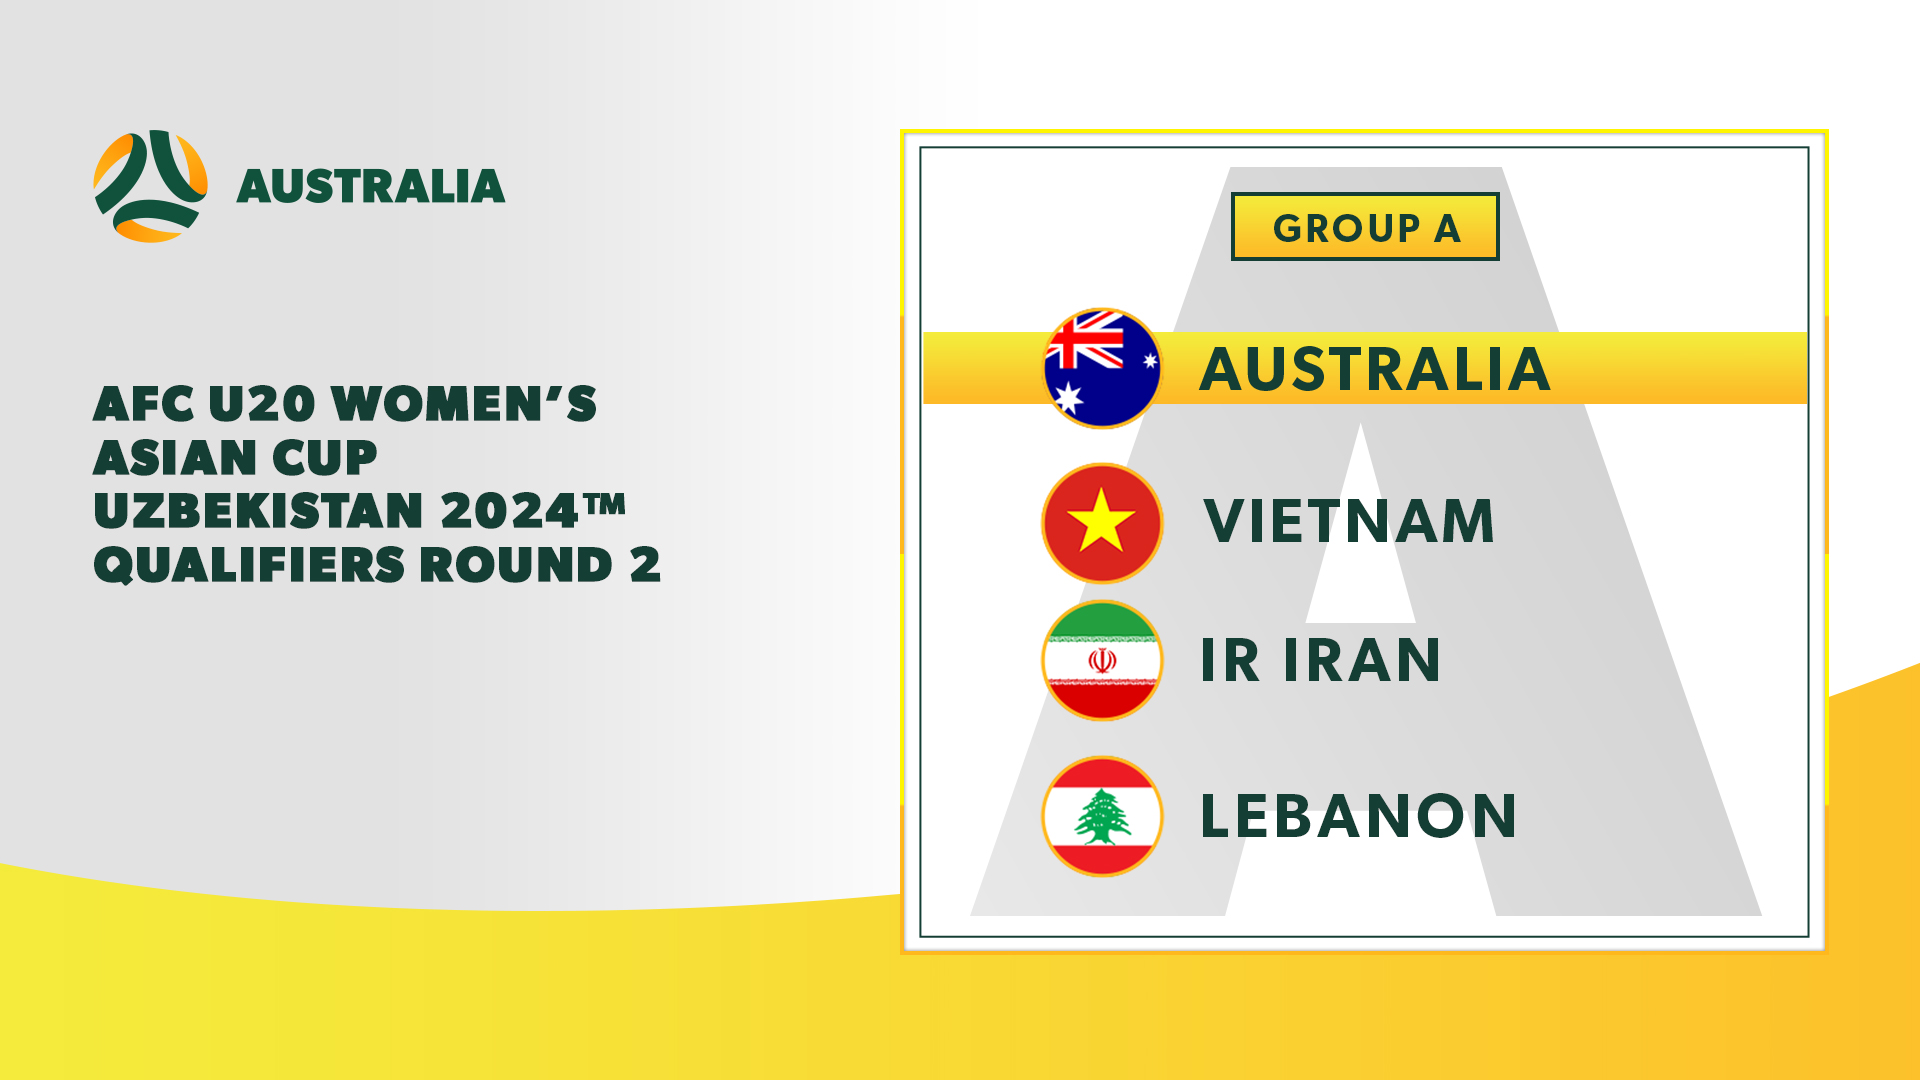 Australia's AFC U20 Women's Asian Cup Uzbekistan 2024™ Qualifying Group